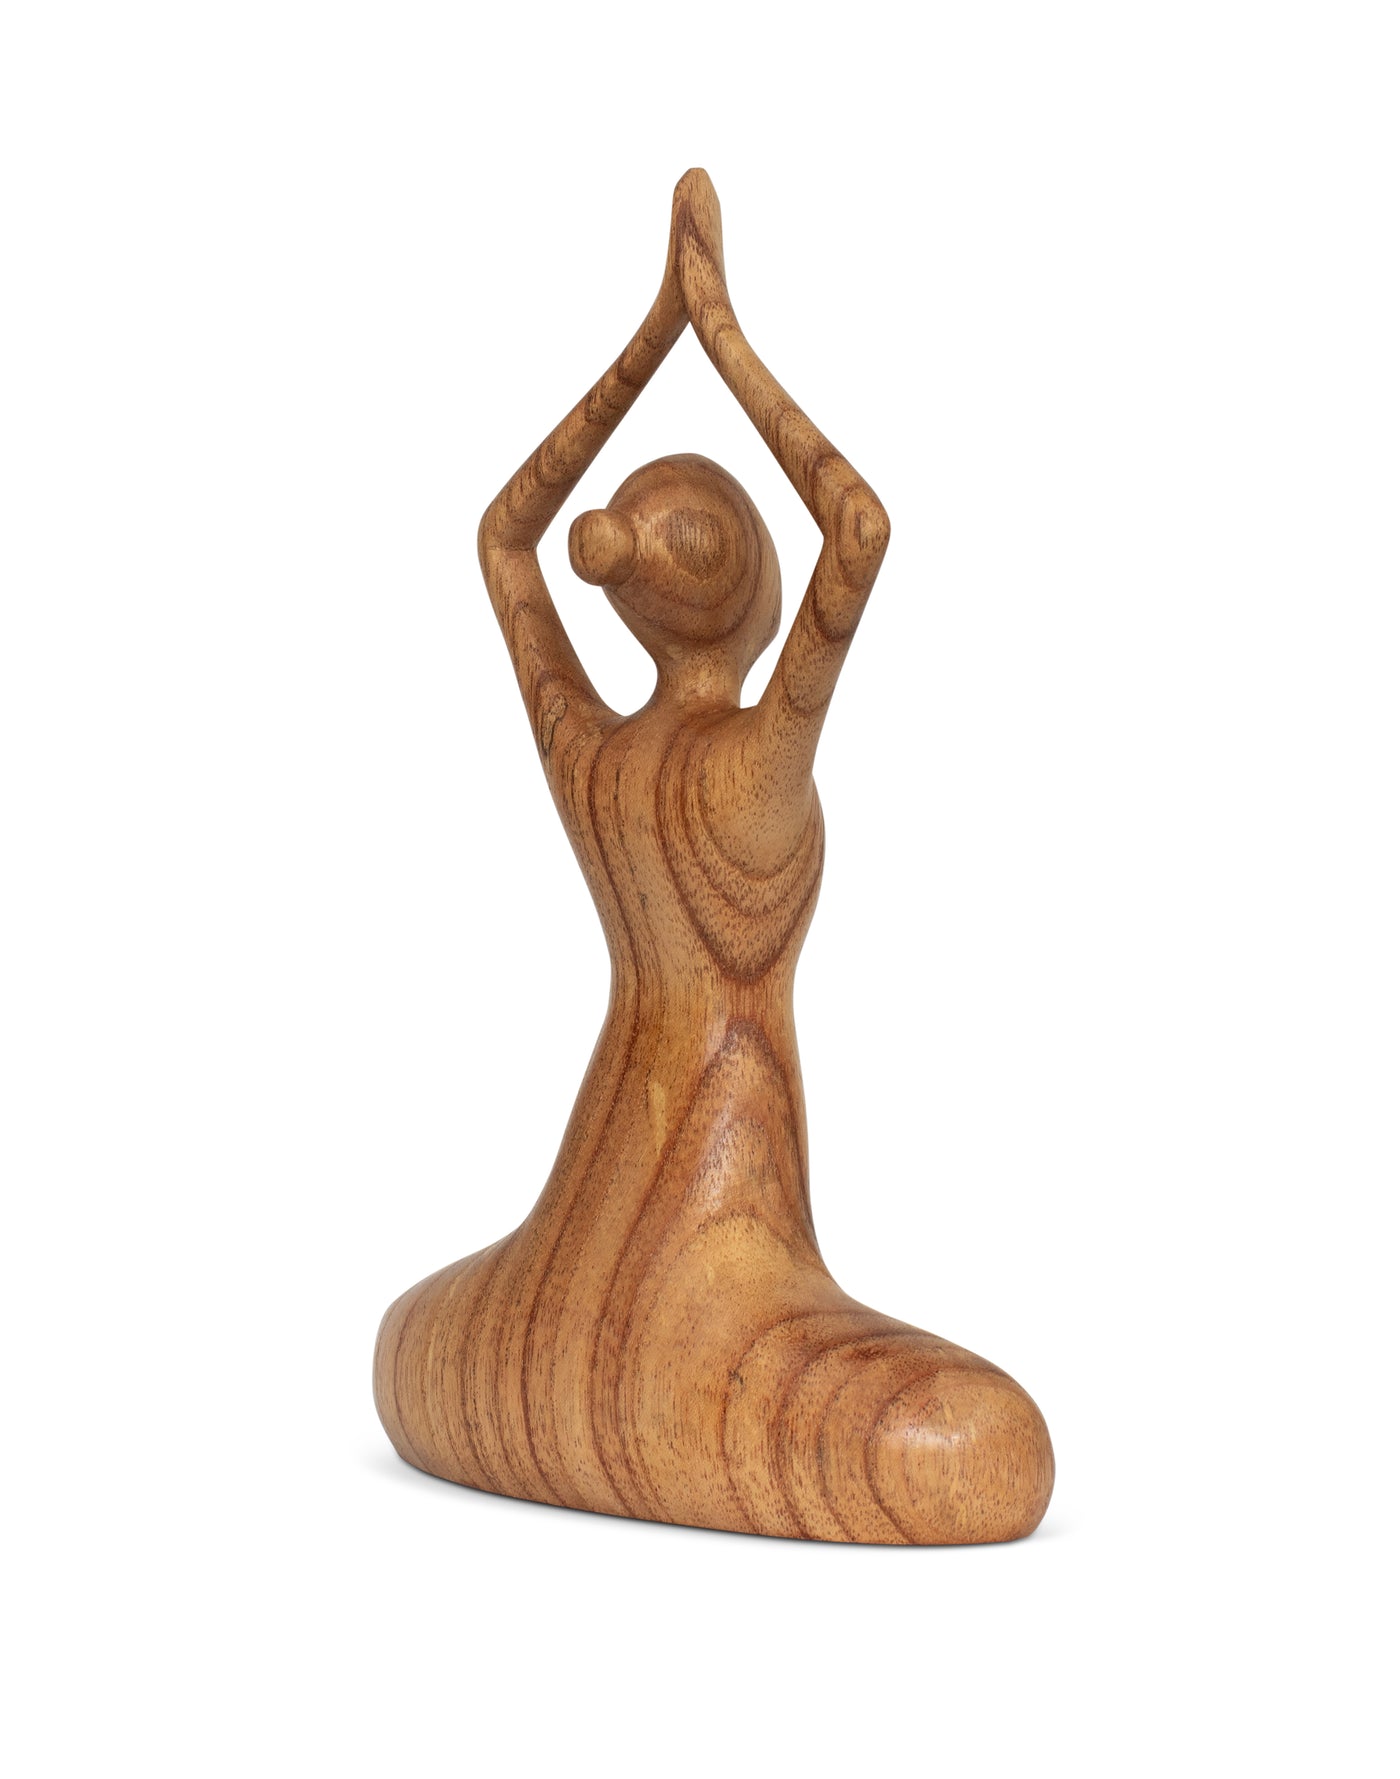 10" Wooden Handmade Mini Yoga Figurines, Yoga Pose Statue, Yoga Room Studio Decor, Mindful Home Decor Yogi Gift, Decorative Shelf Decor Objects - Easy Pose